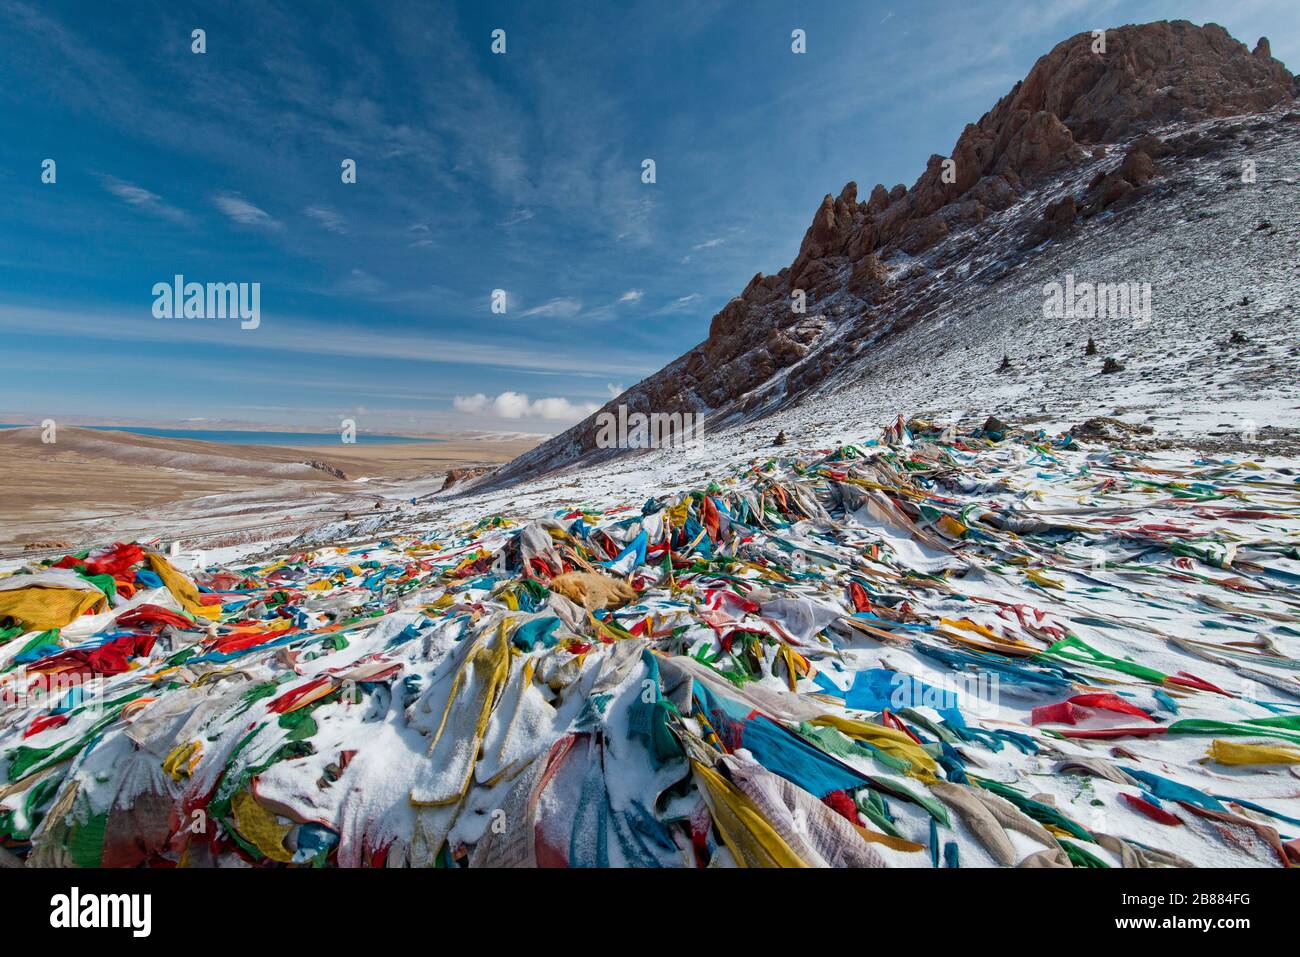 Prayer flags at Lachen la Pass, 5186 m, on the way to the holy Namtso Lake, Tibet, China Stock Photo